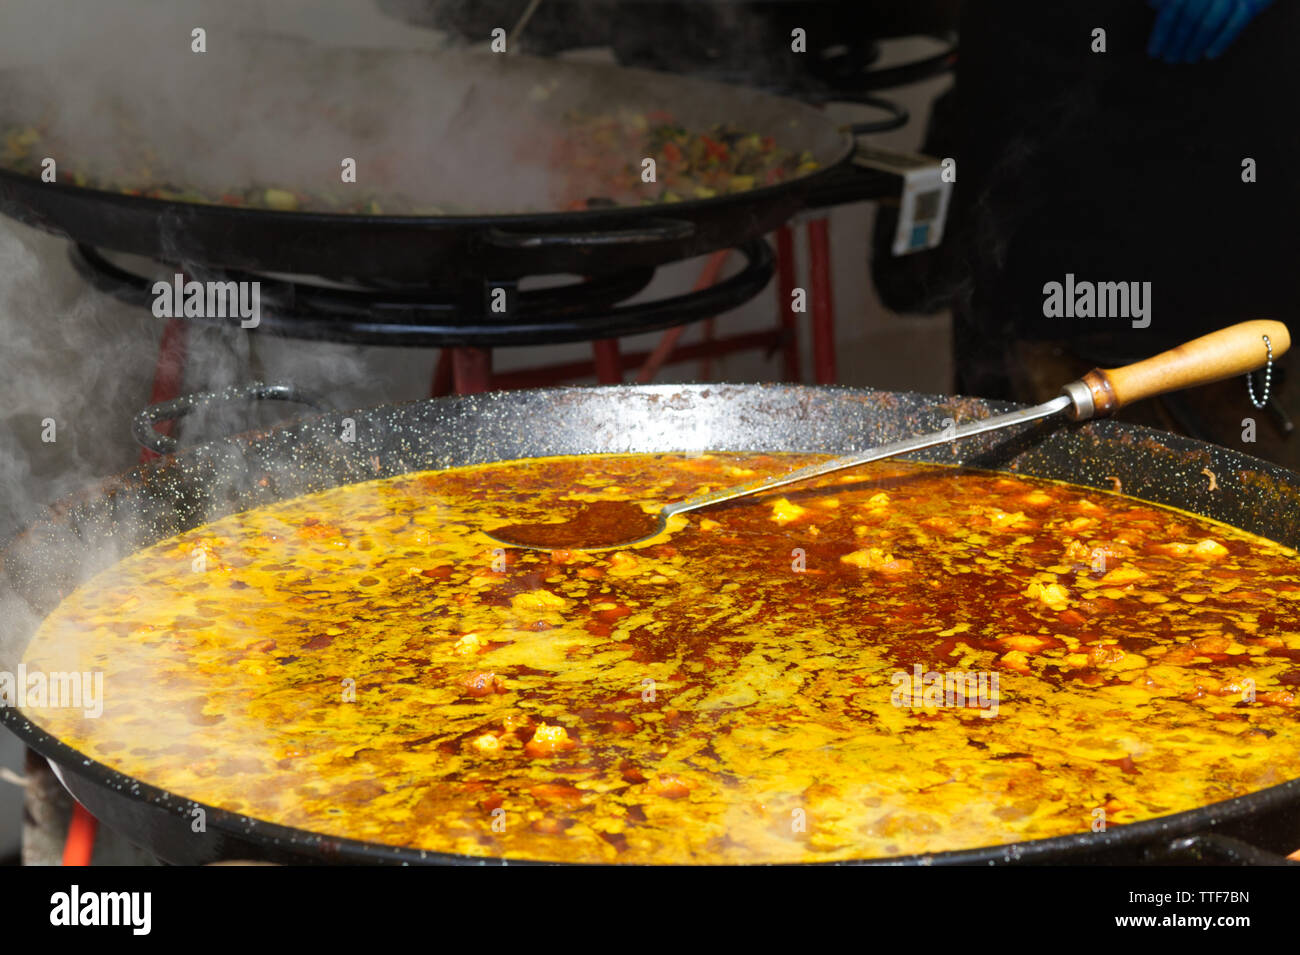 https://c8.alamy.com/comp/TTF7BN/curry-cooking-in-a-large-pan-TTF7BN.jpg